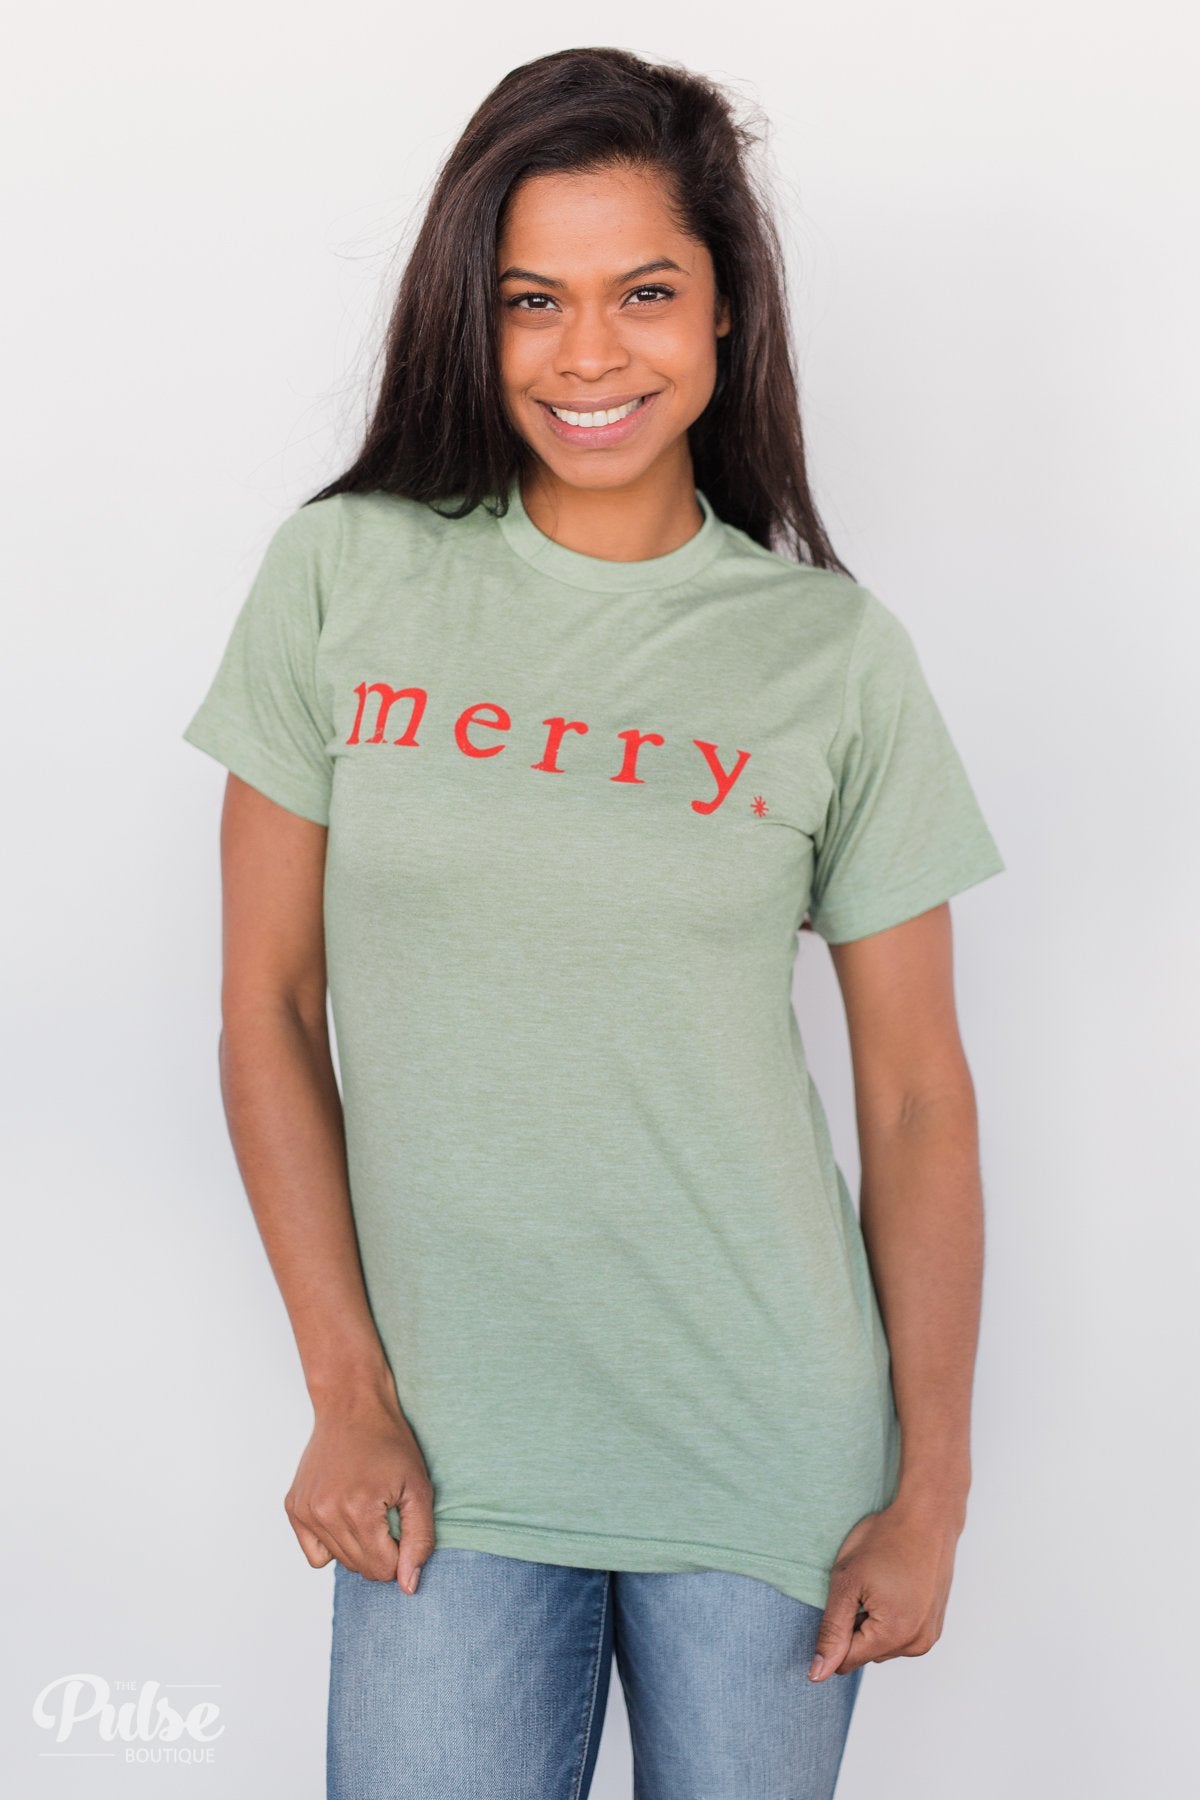 "Merry" Short Sleeve Tee